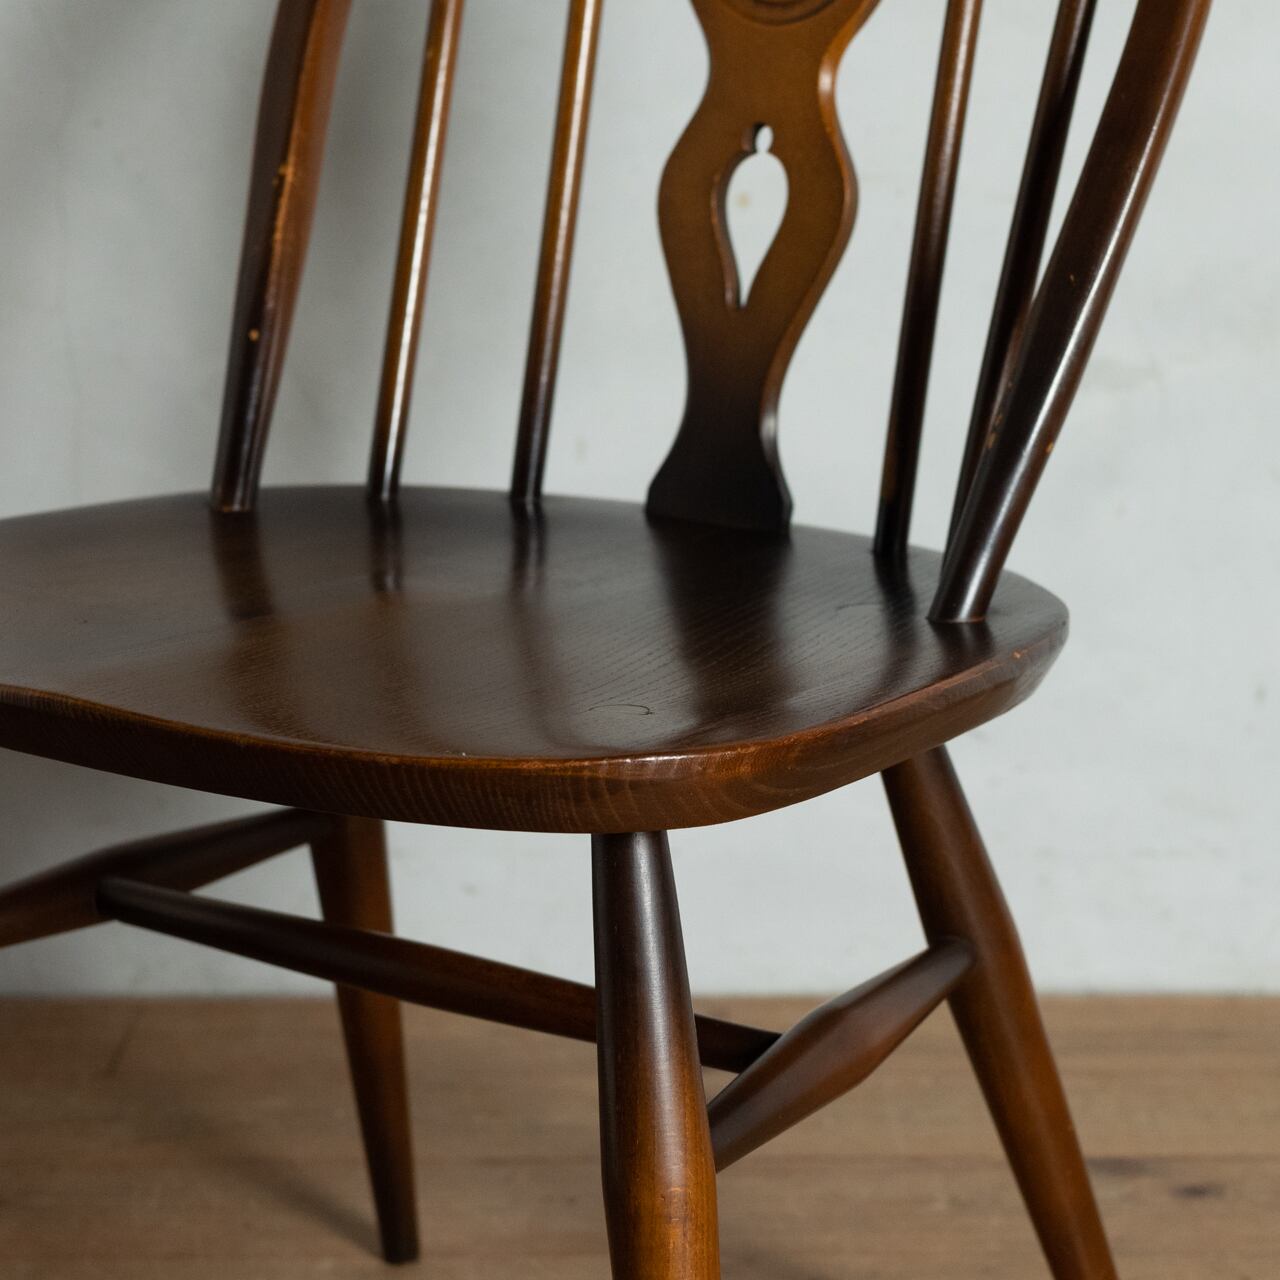 Ercol Thistleback Chair / アーコールシスルバックチェア 〈ダイニングチェア・デスクチェア・椅子・コロニアル〉 112776  | SHABBY'S MARKETPLACE アンティーク・ヴィンテージ 家具や雑貨のお店